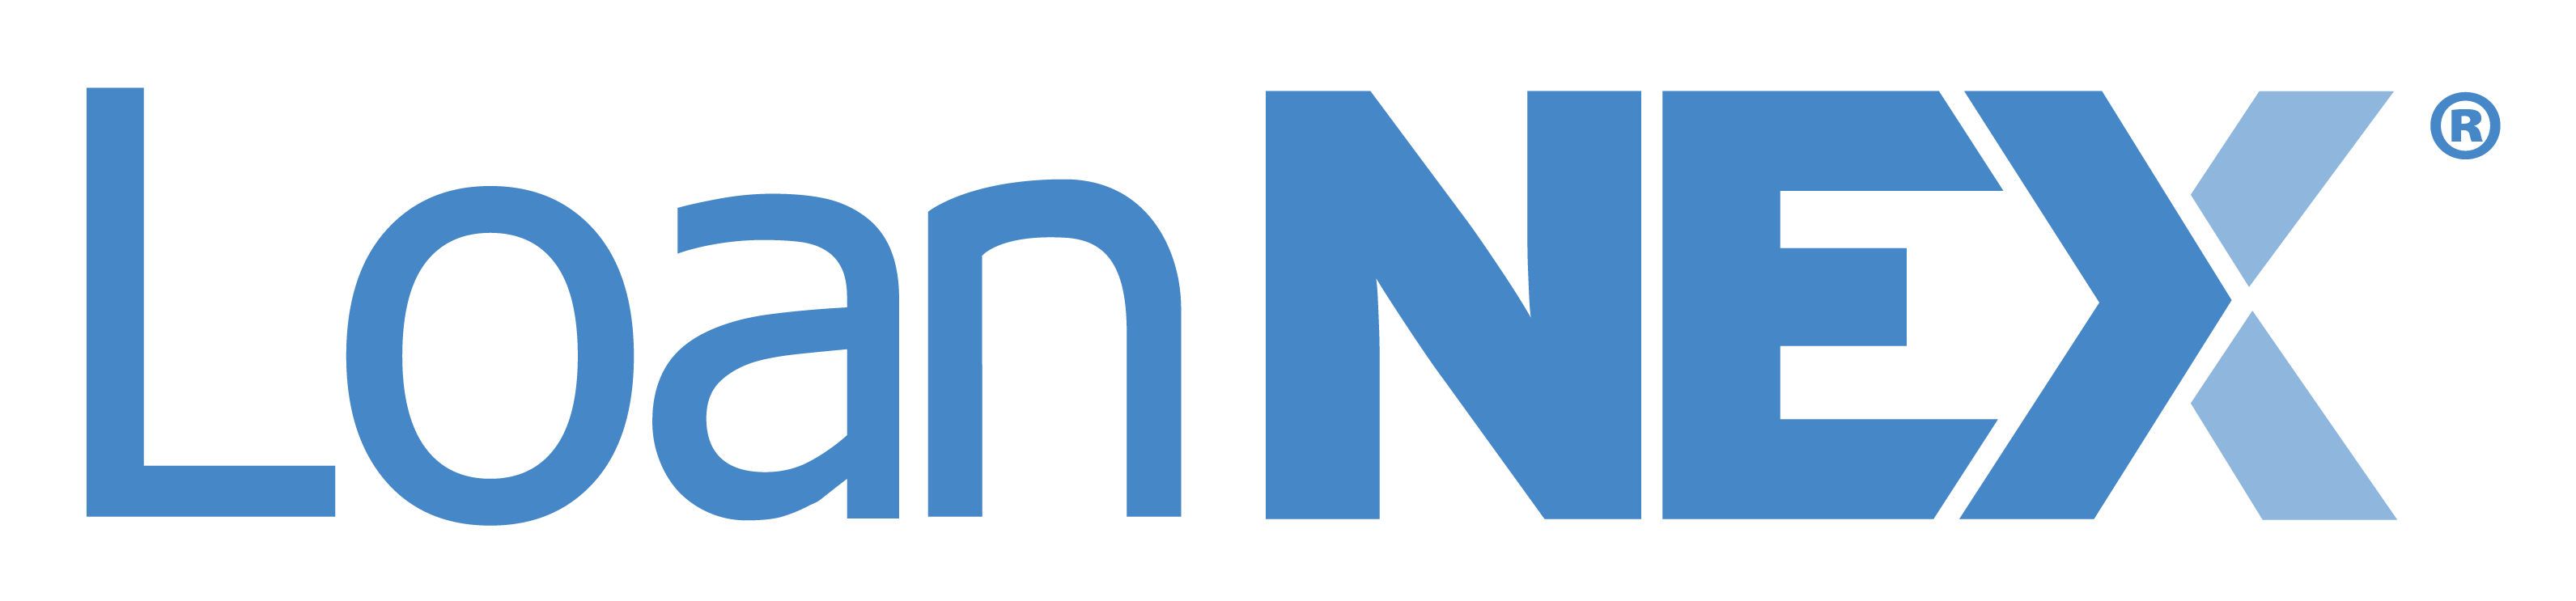 NEX_0020_Blue-Logo-Hi-Res